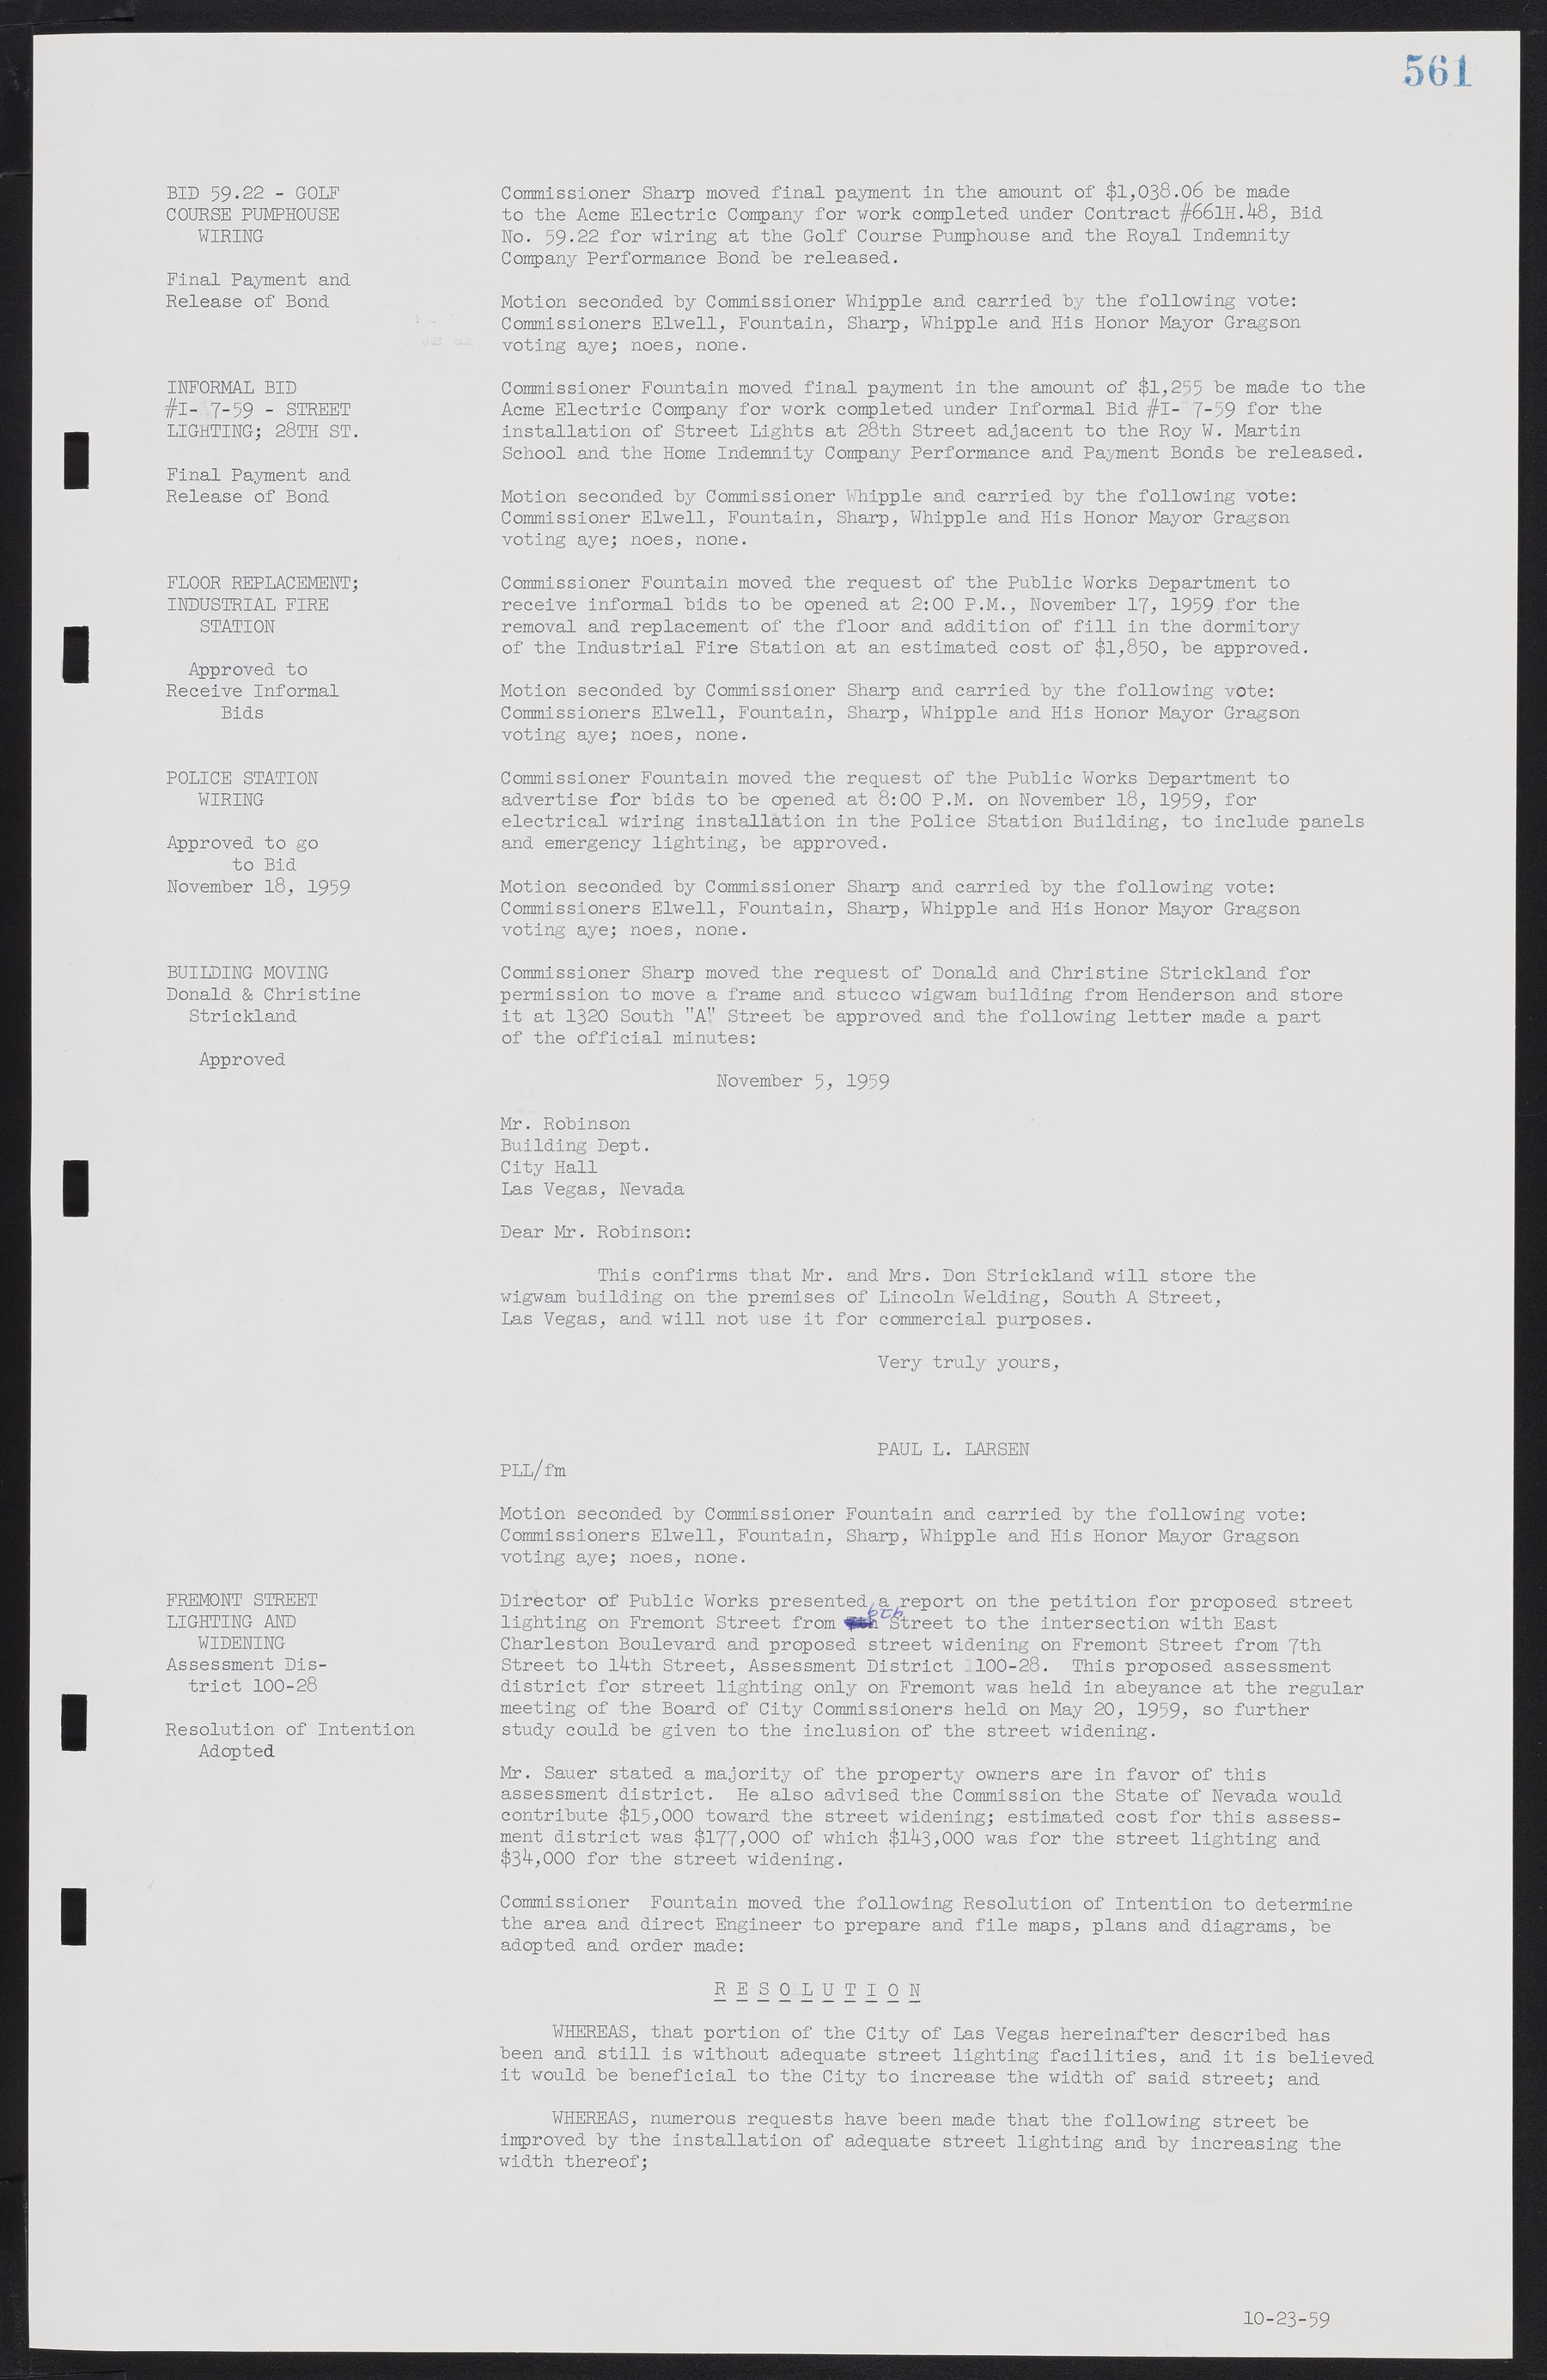 Las Vegas City Commission Minutes, November 20, 1957 to December 2, 1959, lvc000011-597